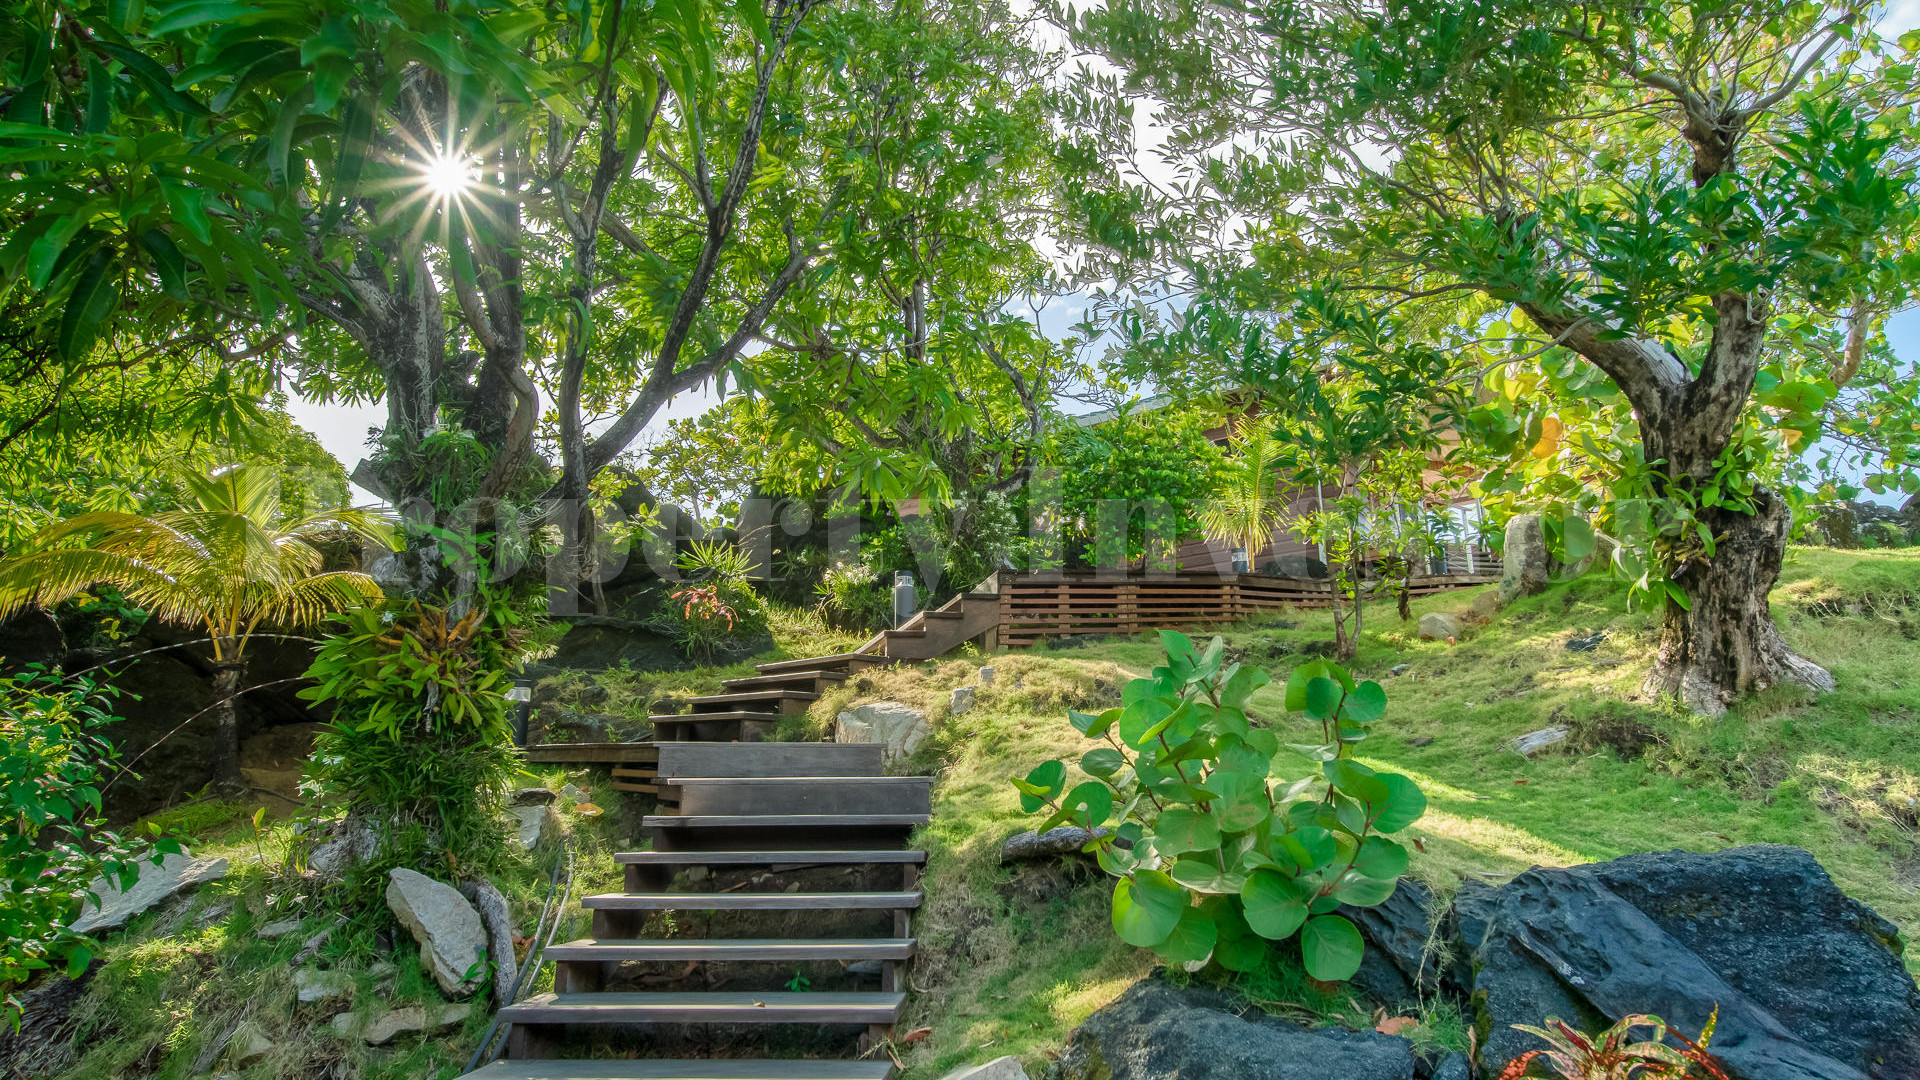 Fabulous 4 Bedroom Private Island Residence for Sale in Guanaja, Honduras